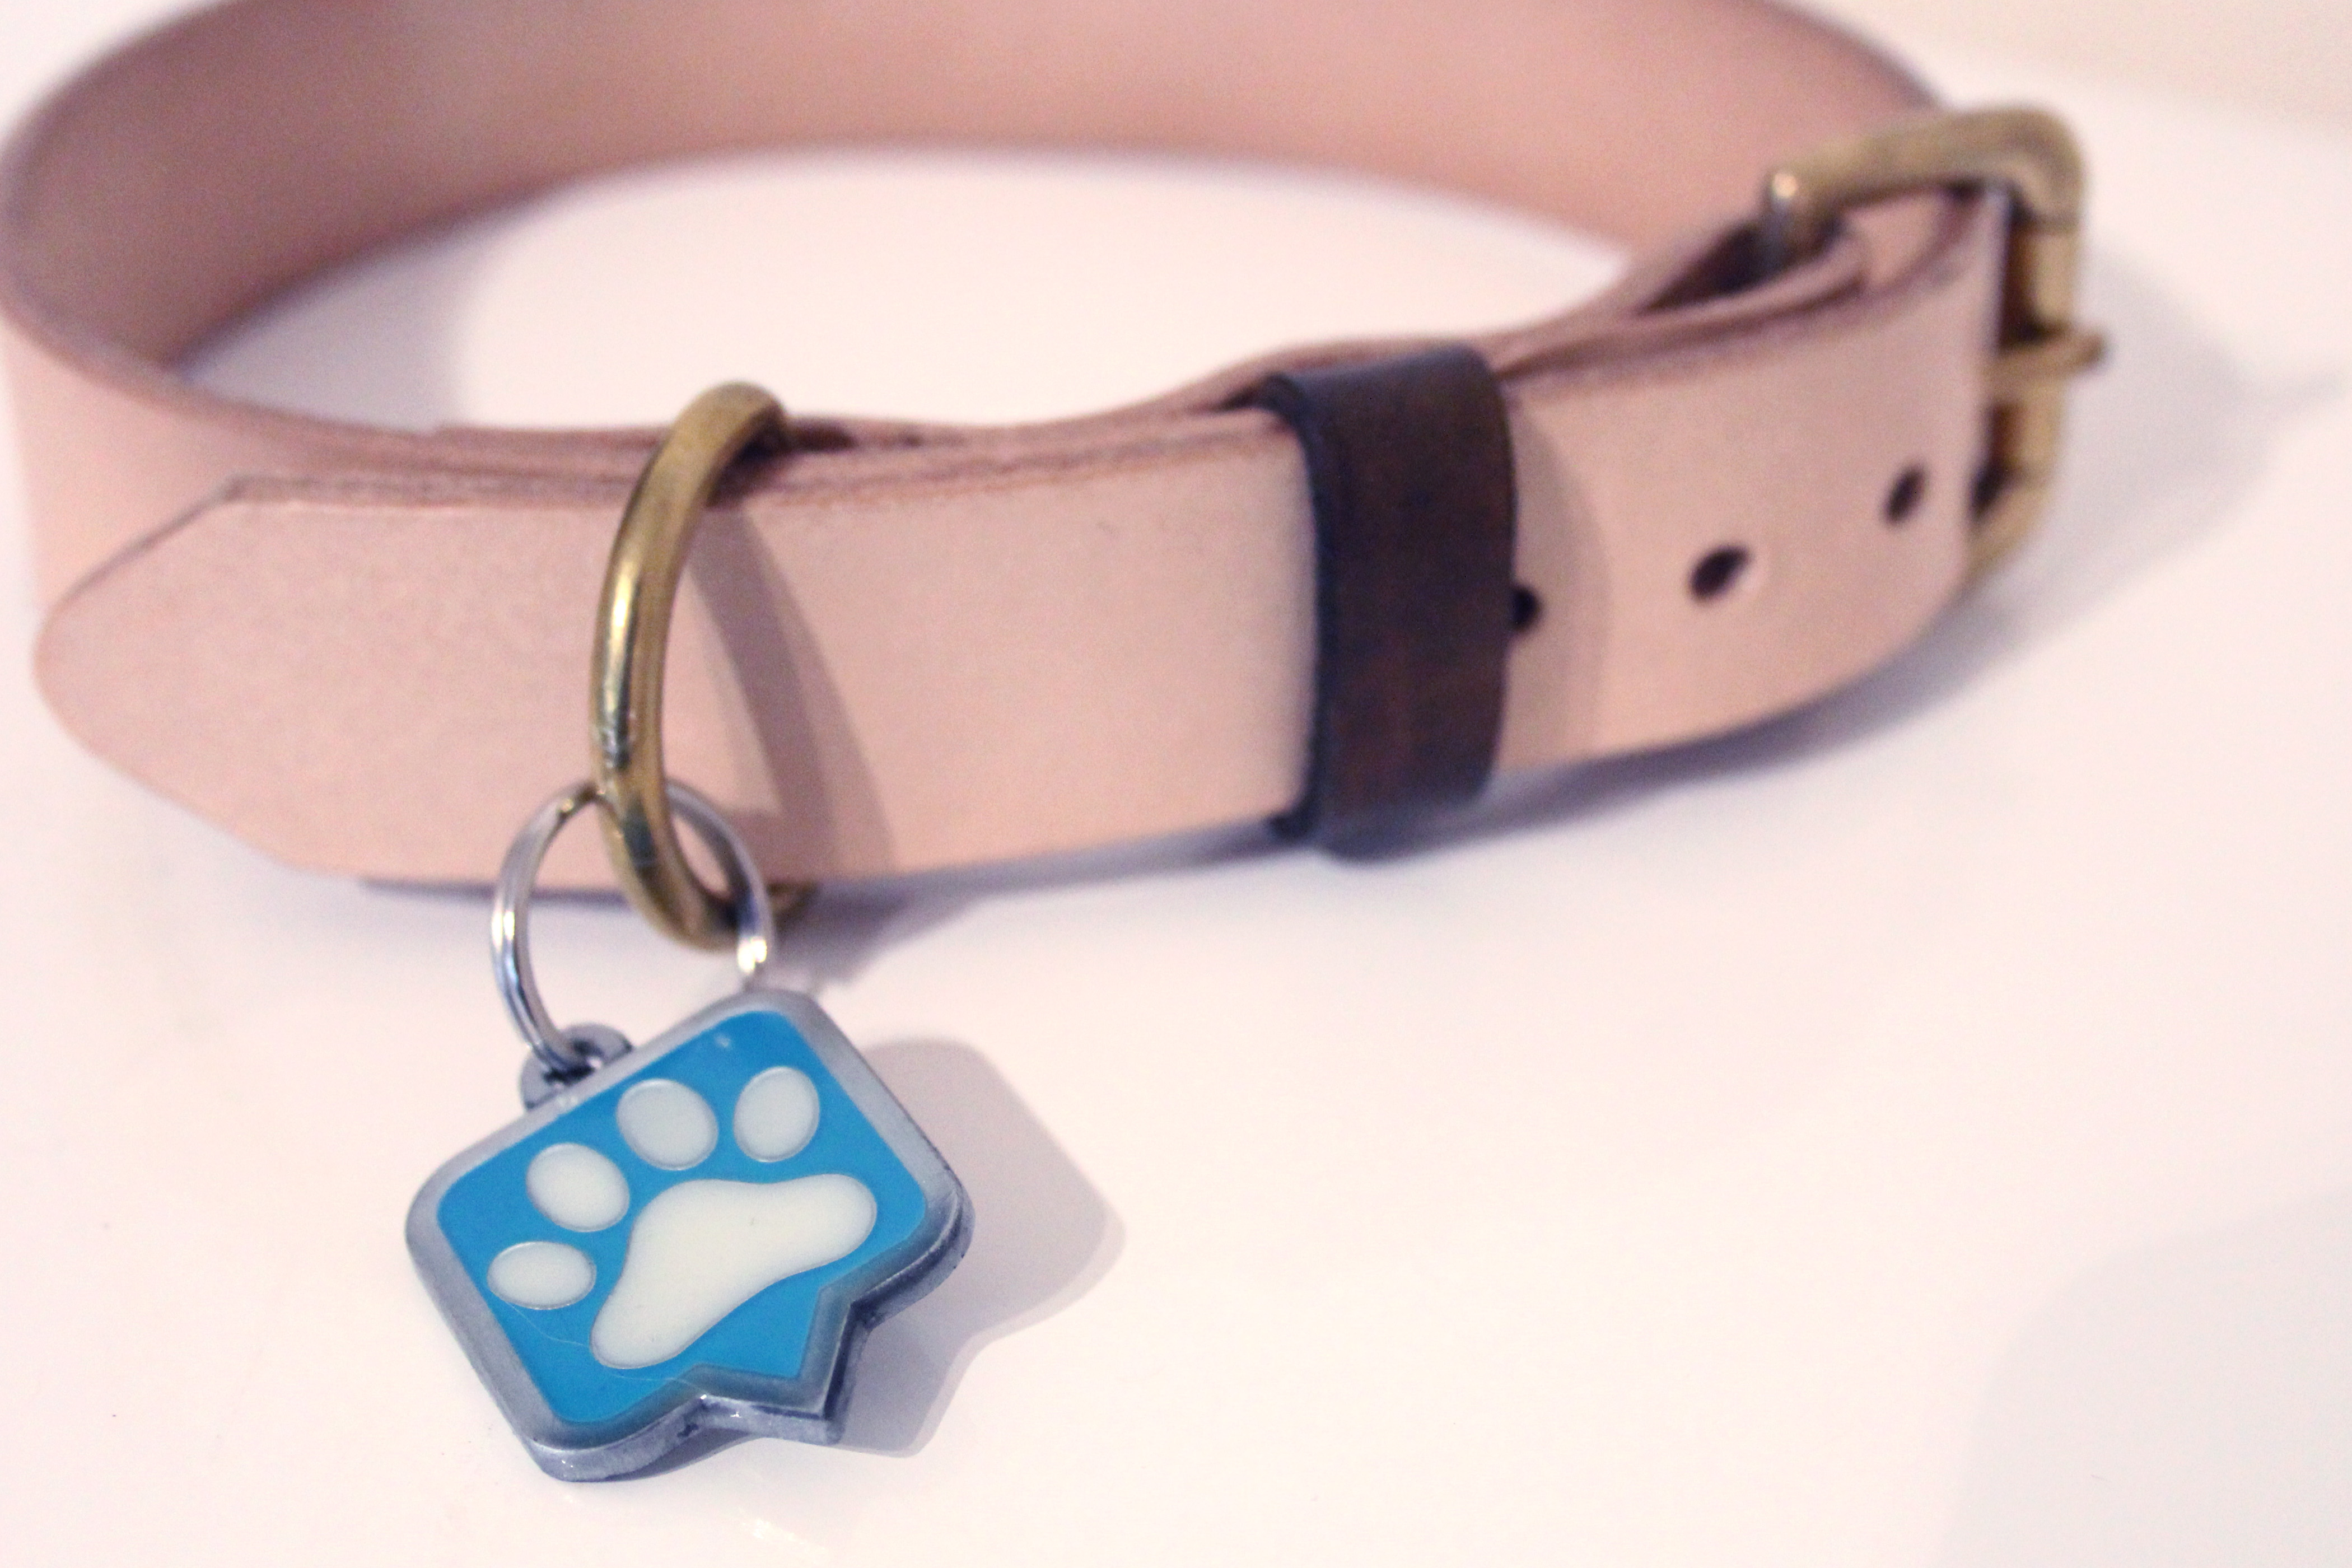 PAWtechnologies tag on a dog collar 